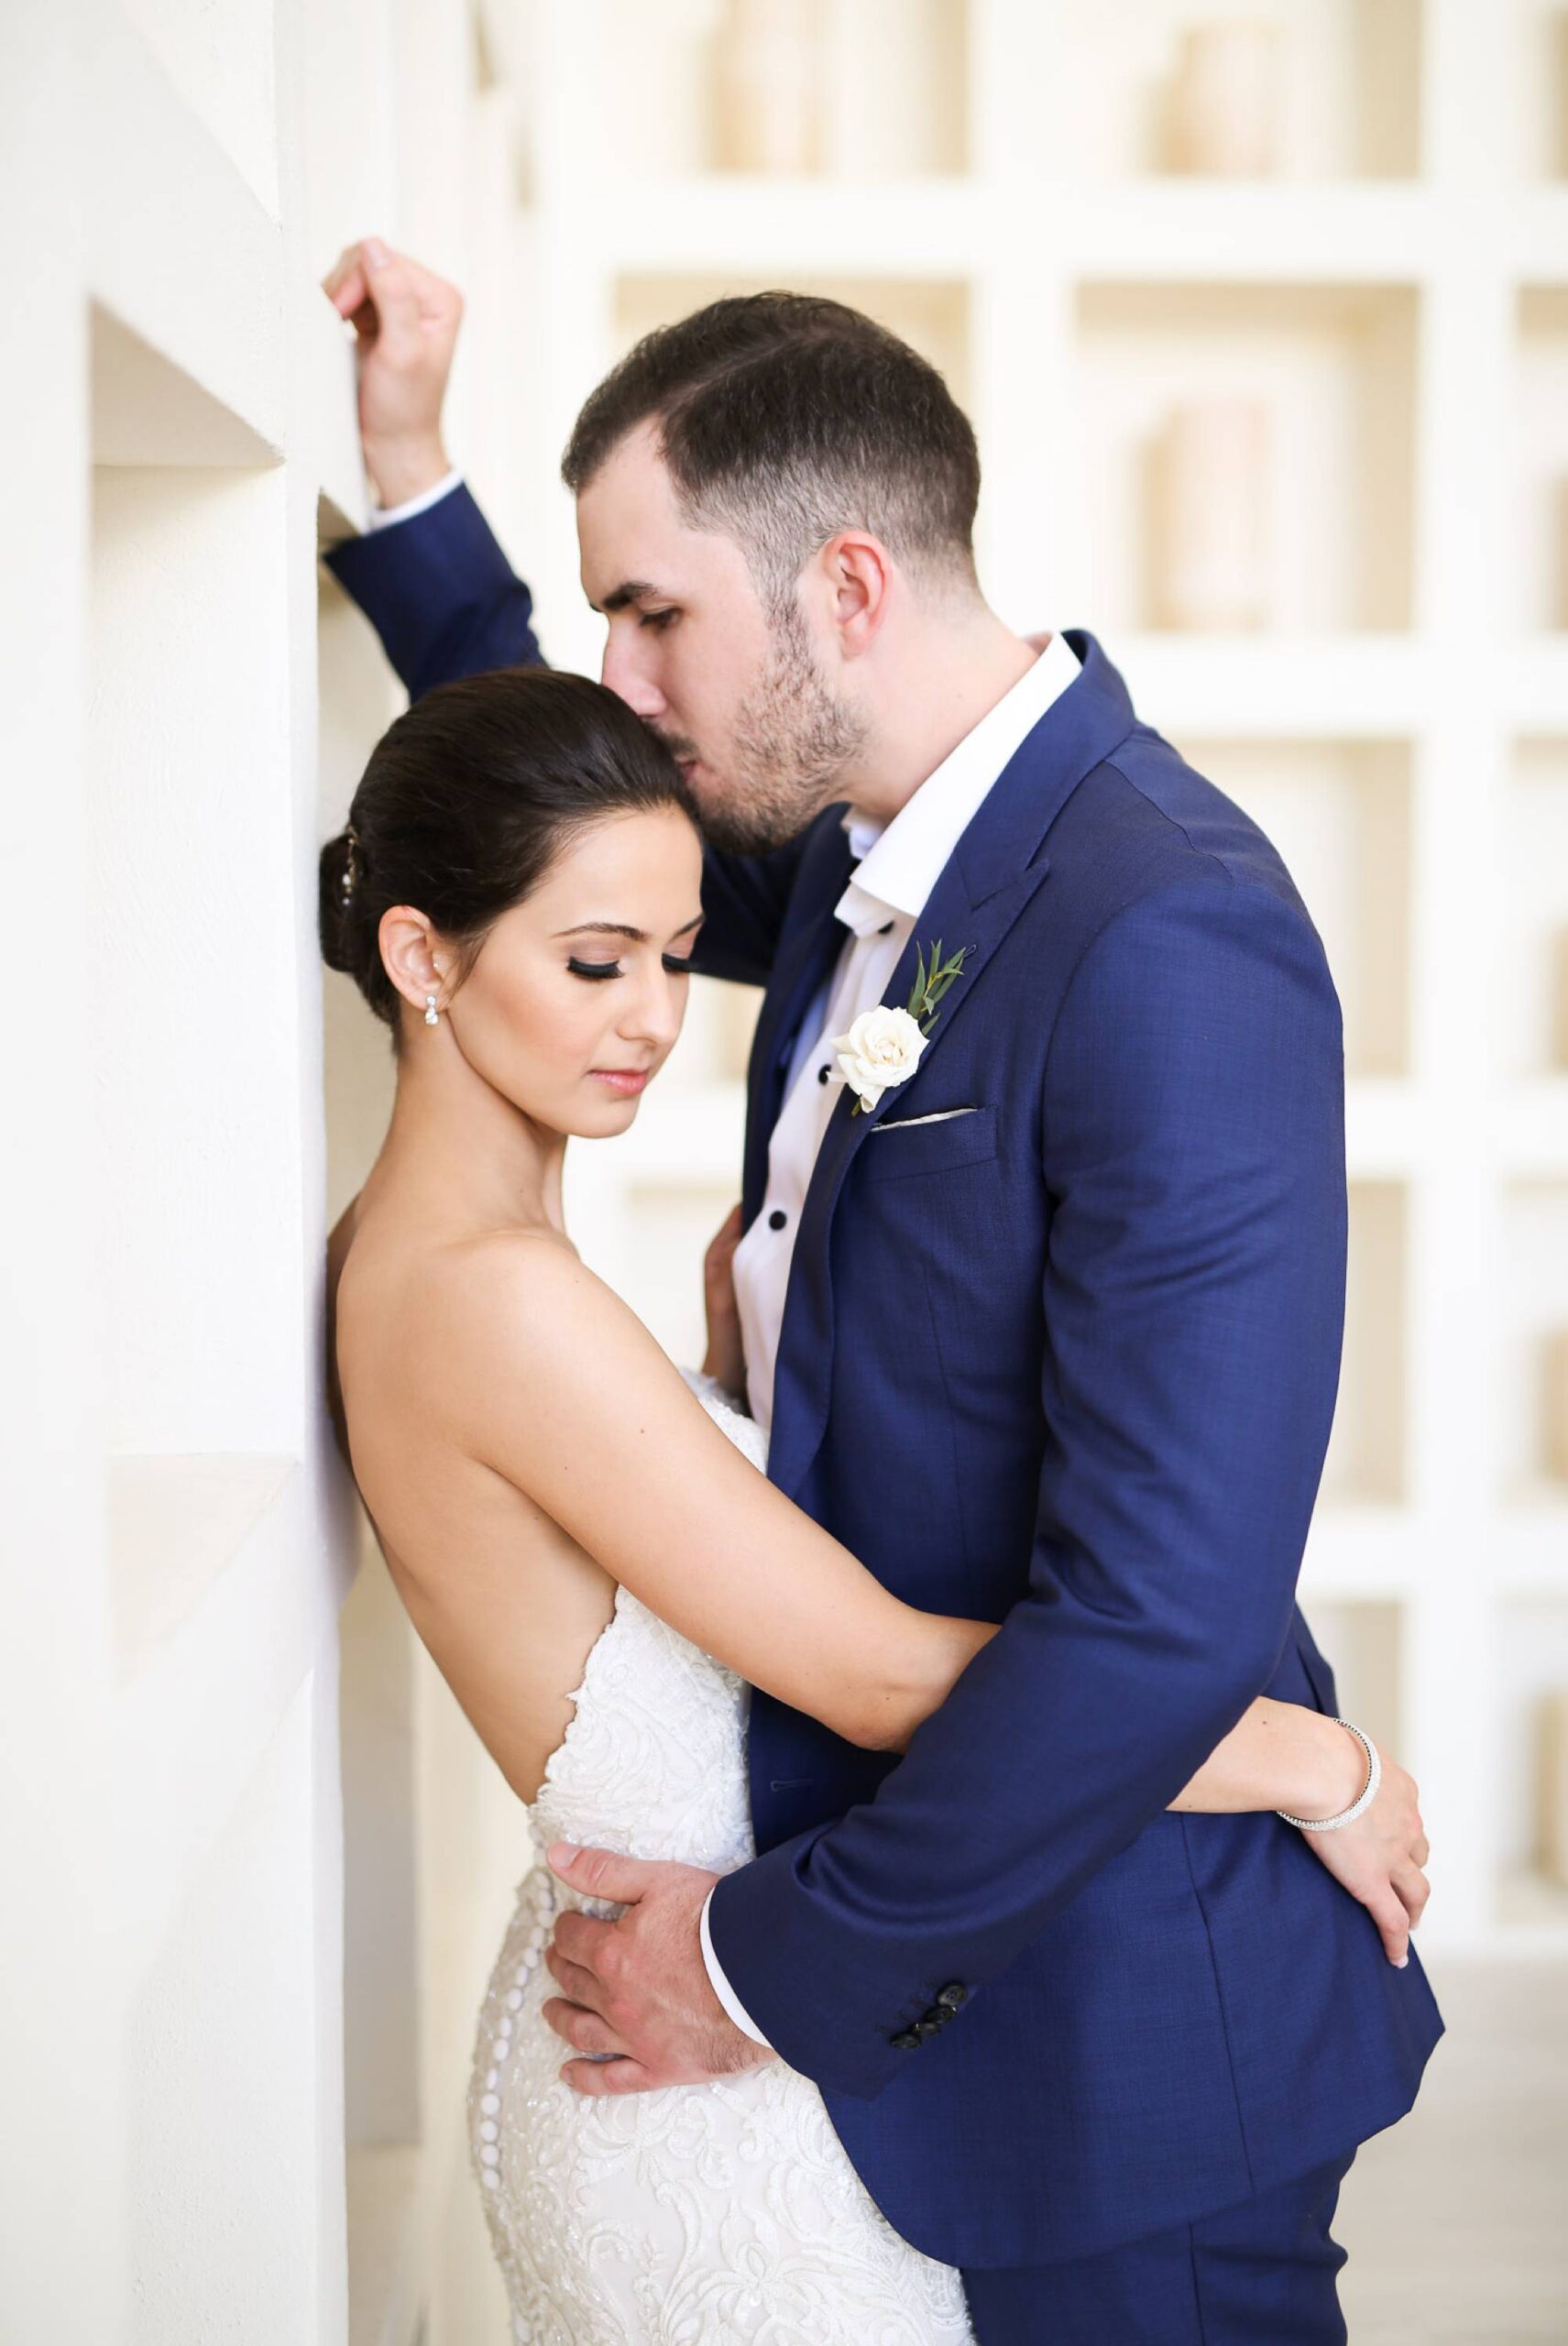 Groom kisses bride on forehead, wedding day